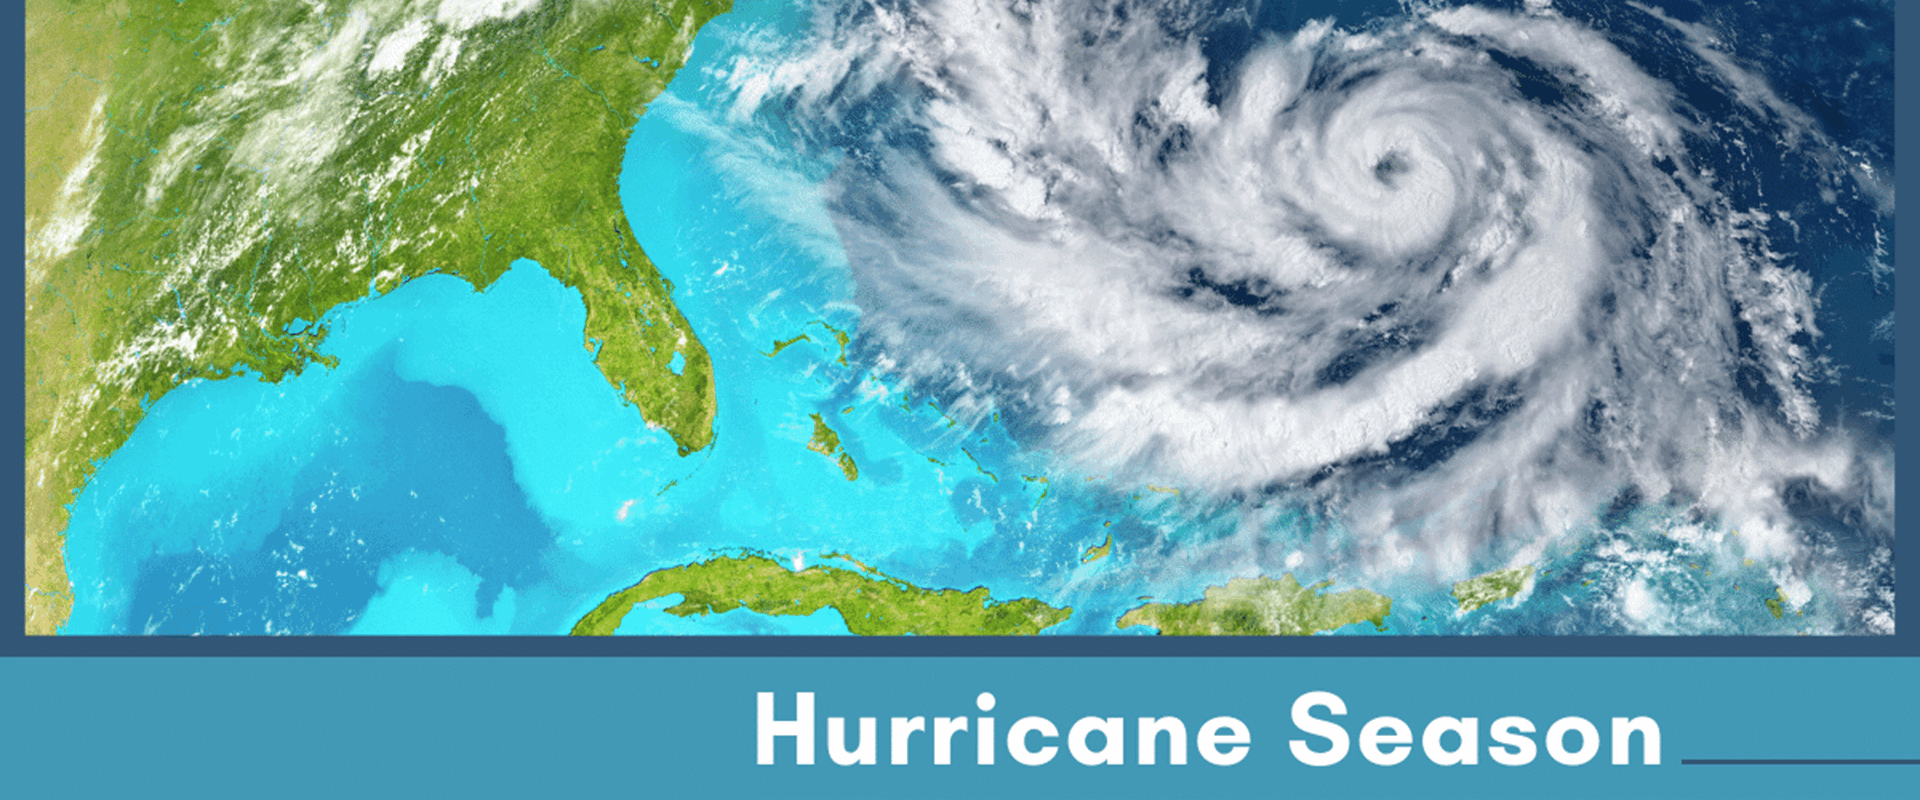 Hurricane Season Travel Insurance